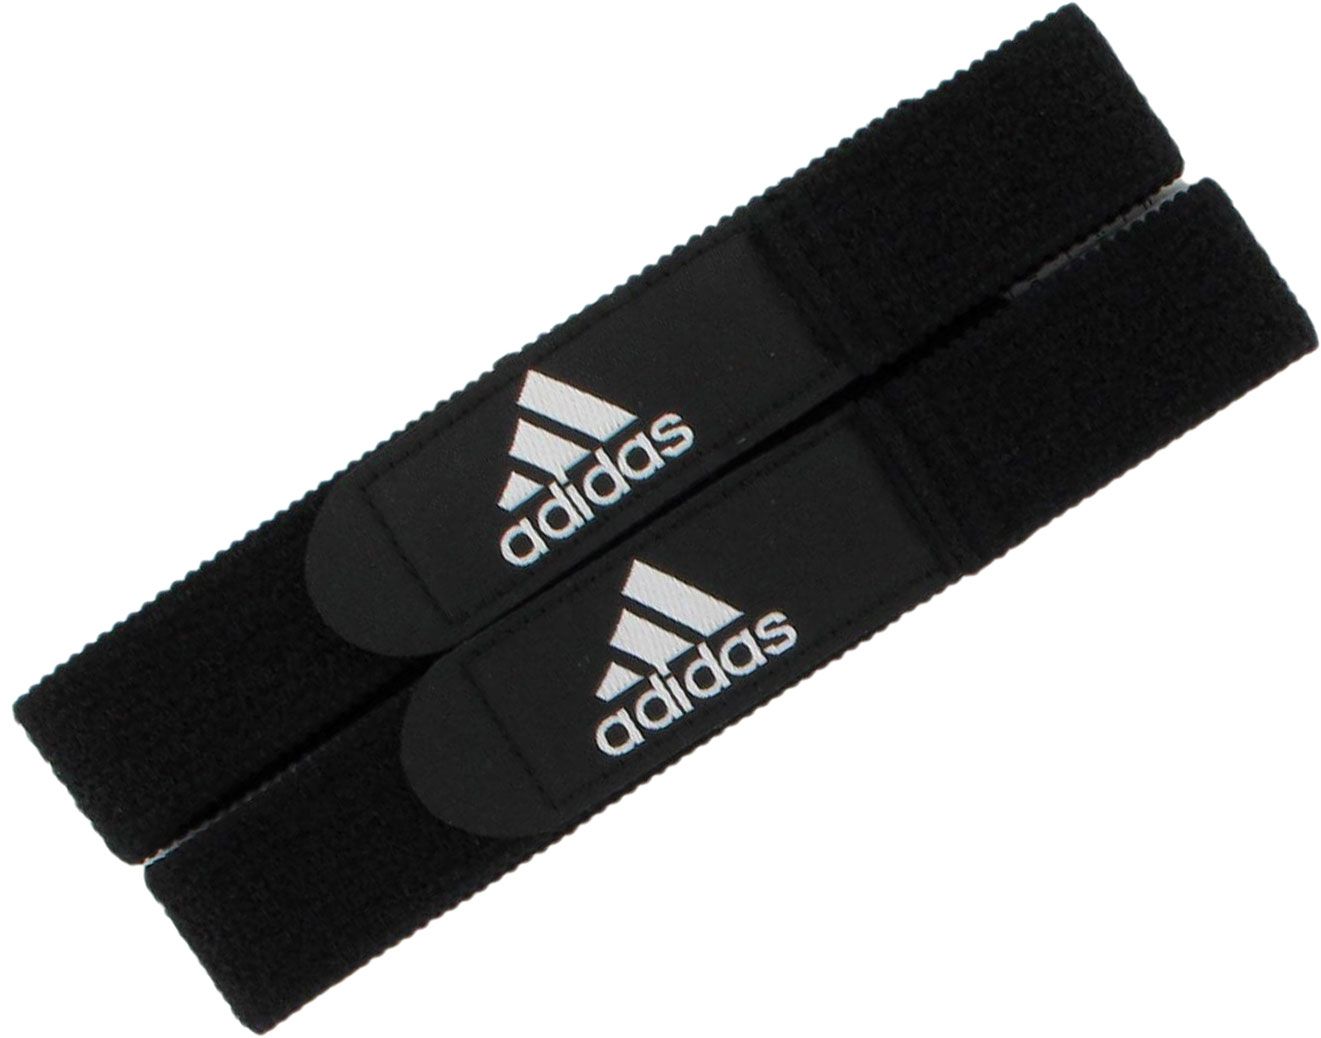 adidas shin pad straps